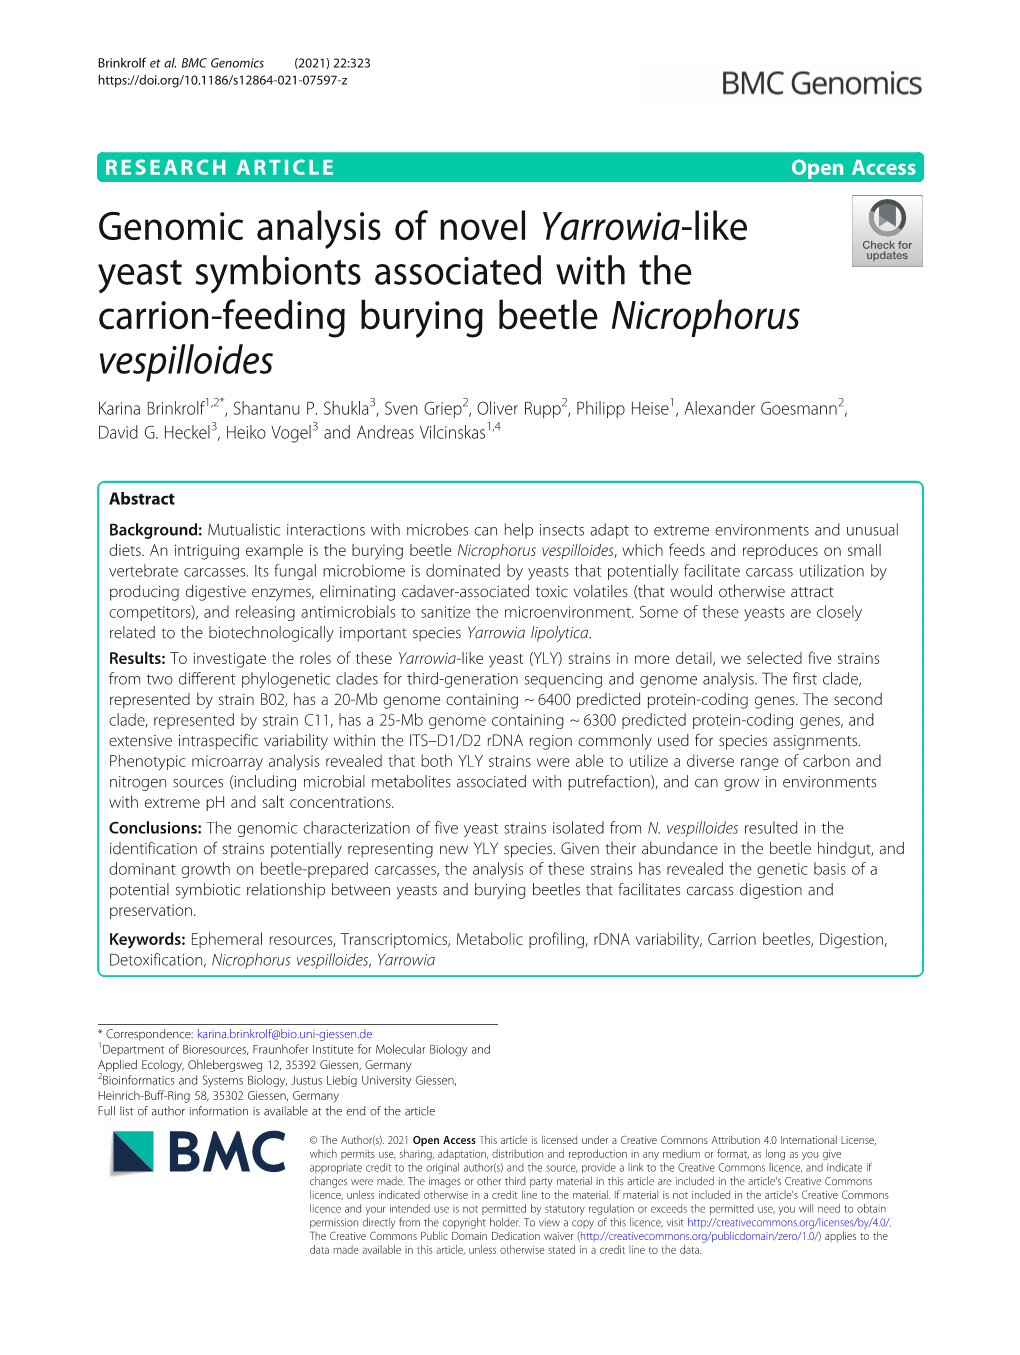 Genomic Analysis of Novel Yarrowia-Like Yeast Symbionts Associated with the Carrion-Feeding Burying Beetle Nicrophorus Vespilloides